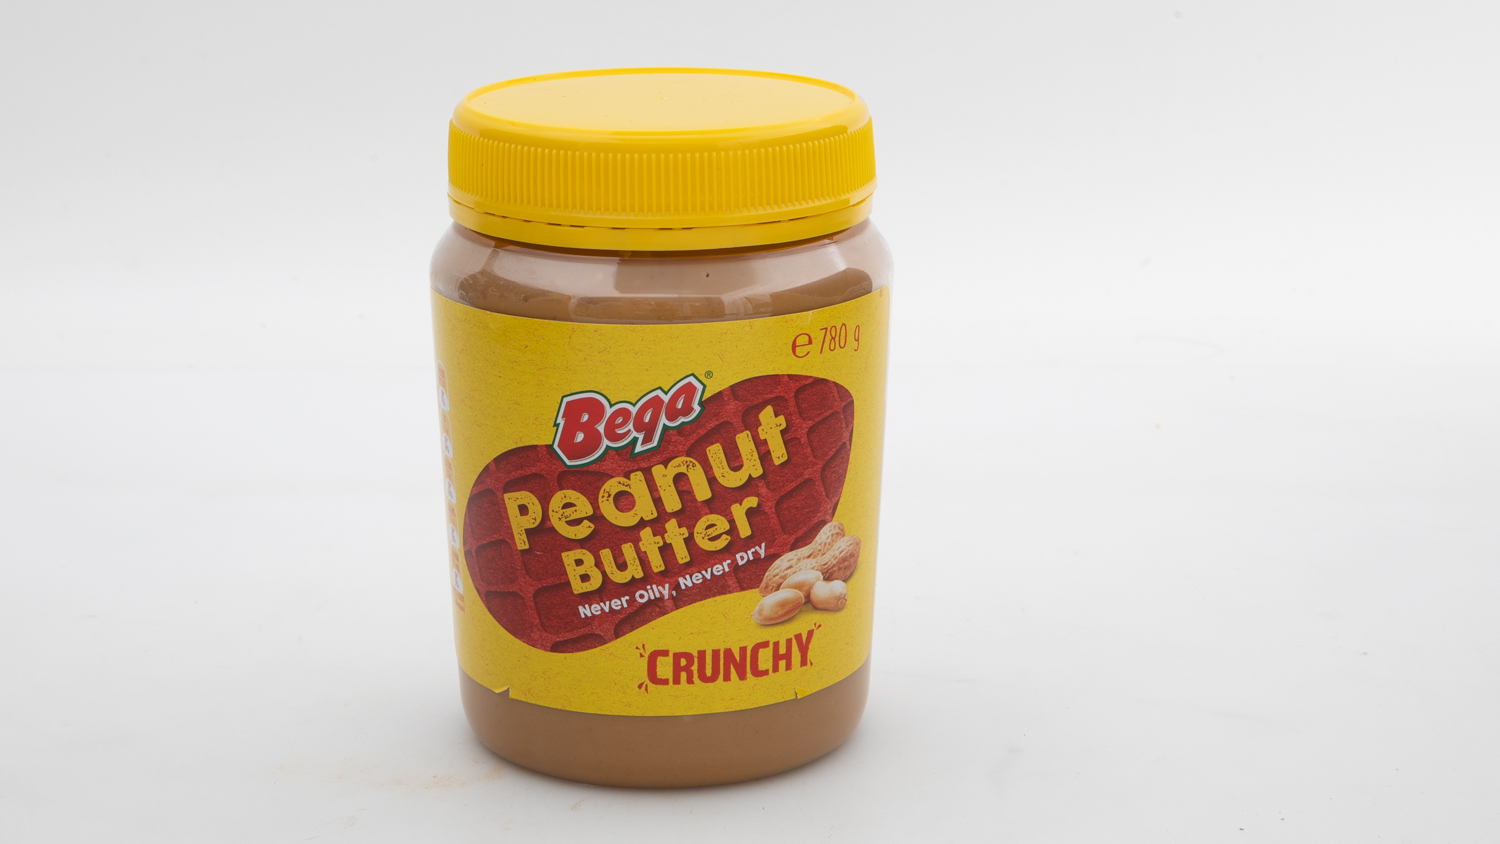 Bega Peanut Butter Crunchy carousel image